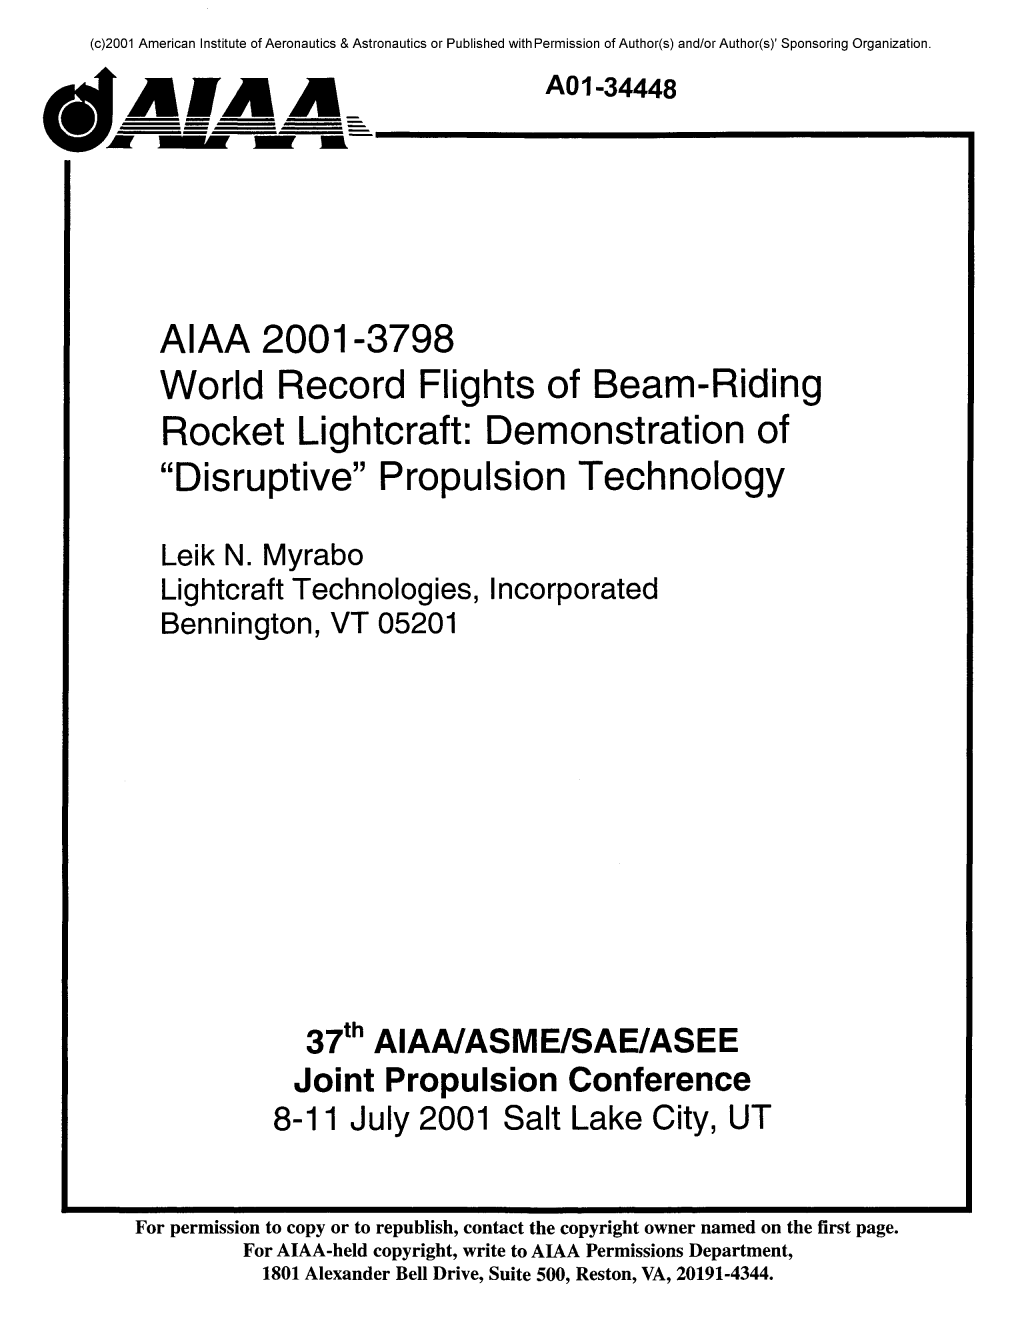 World Record Flights of Beam-Riding Rocket Lightcraft: Demonstration of "Disruptive" Propulsion Technology